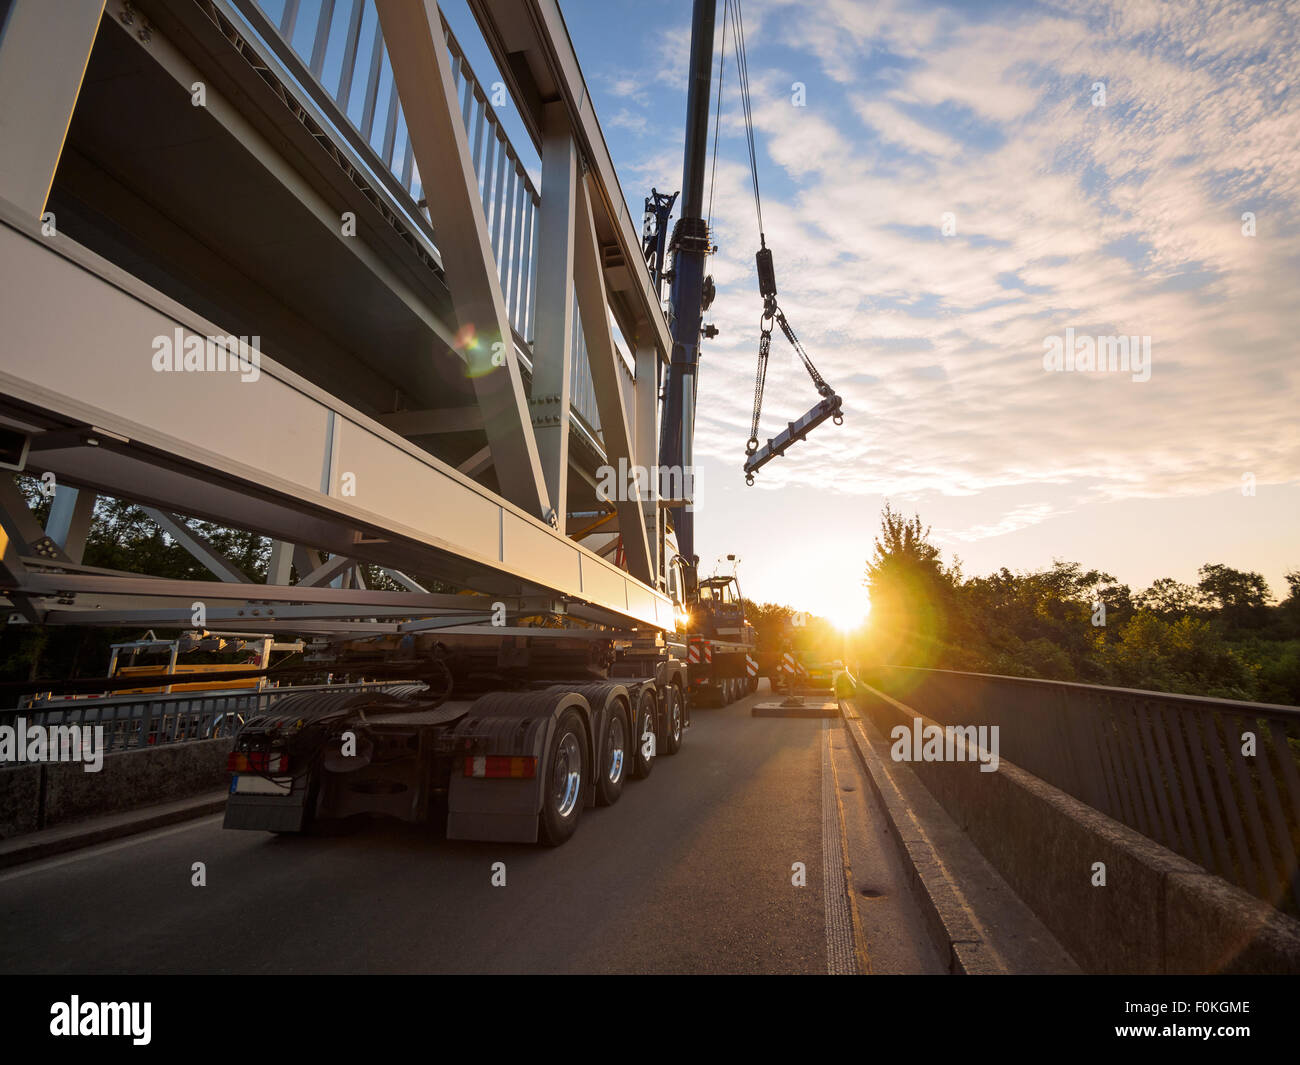 Germany, Kippenheimweiler, construction of a pedestrian bridge Stock Photo